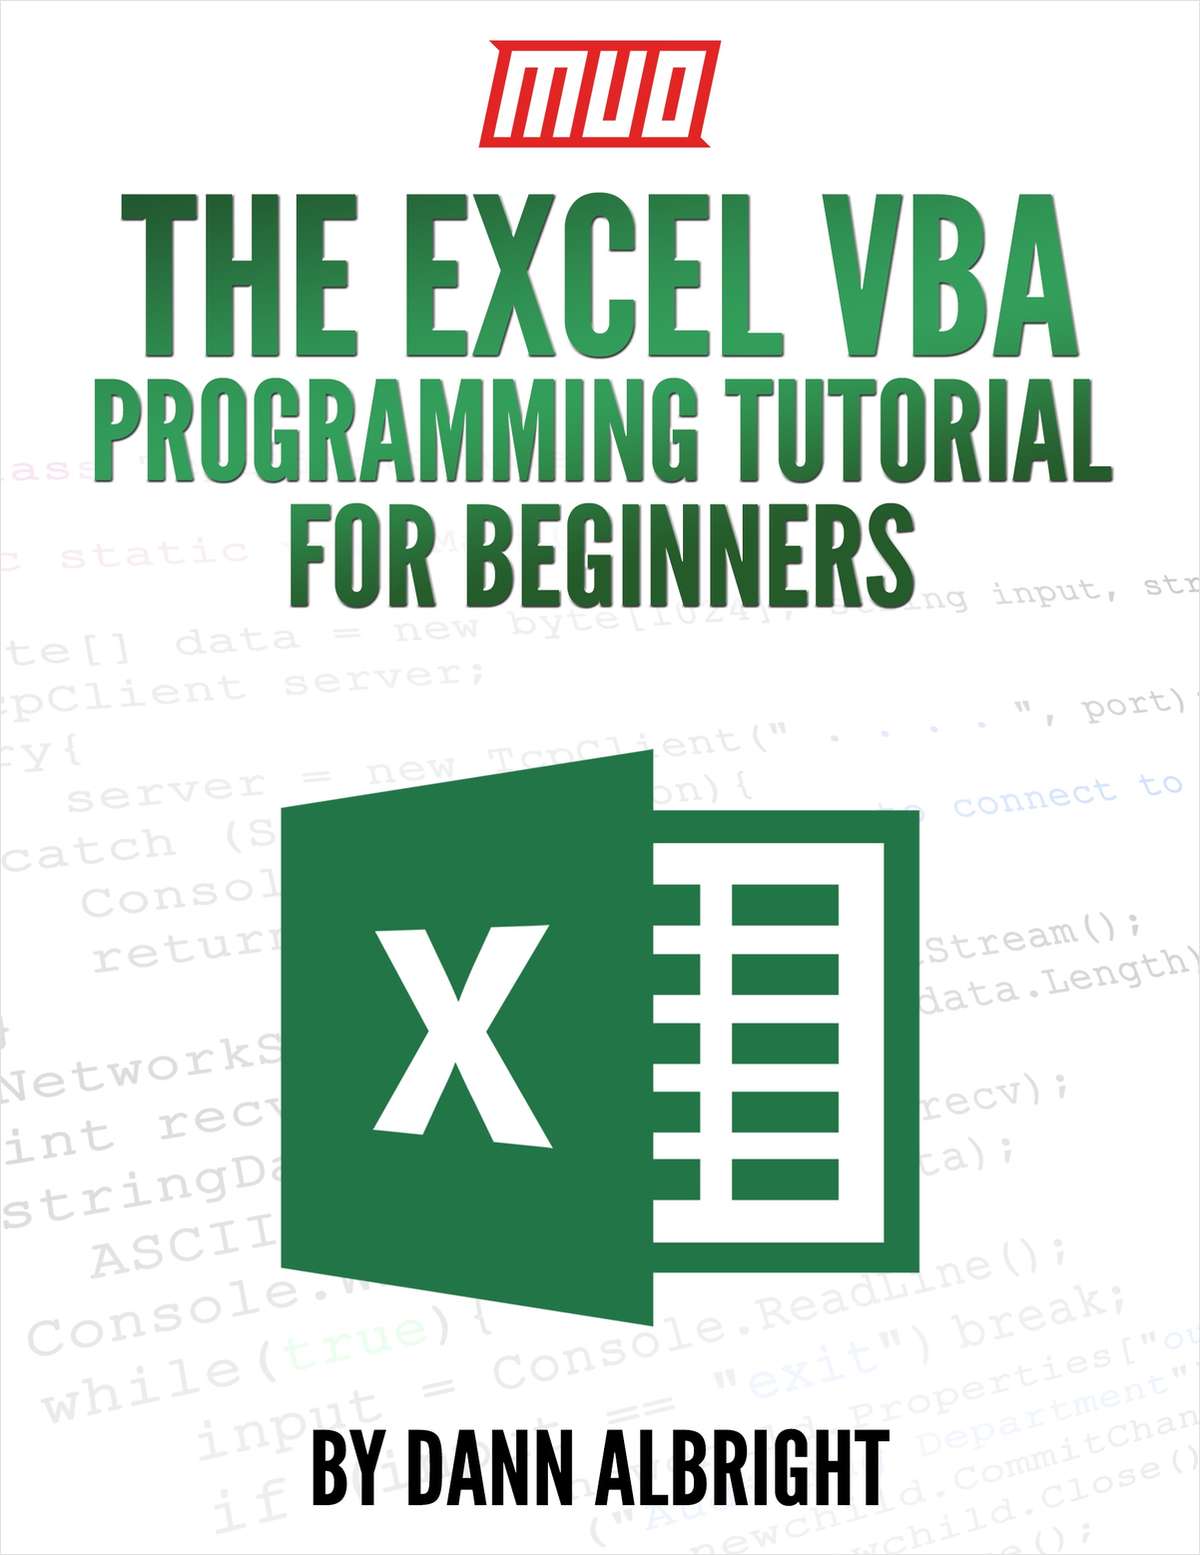 The Excel VBA Programming Tutorial for Beginners